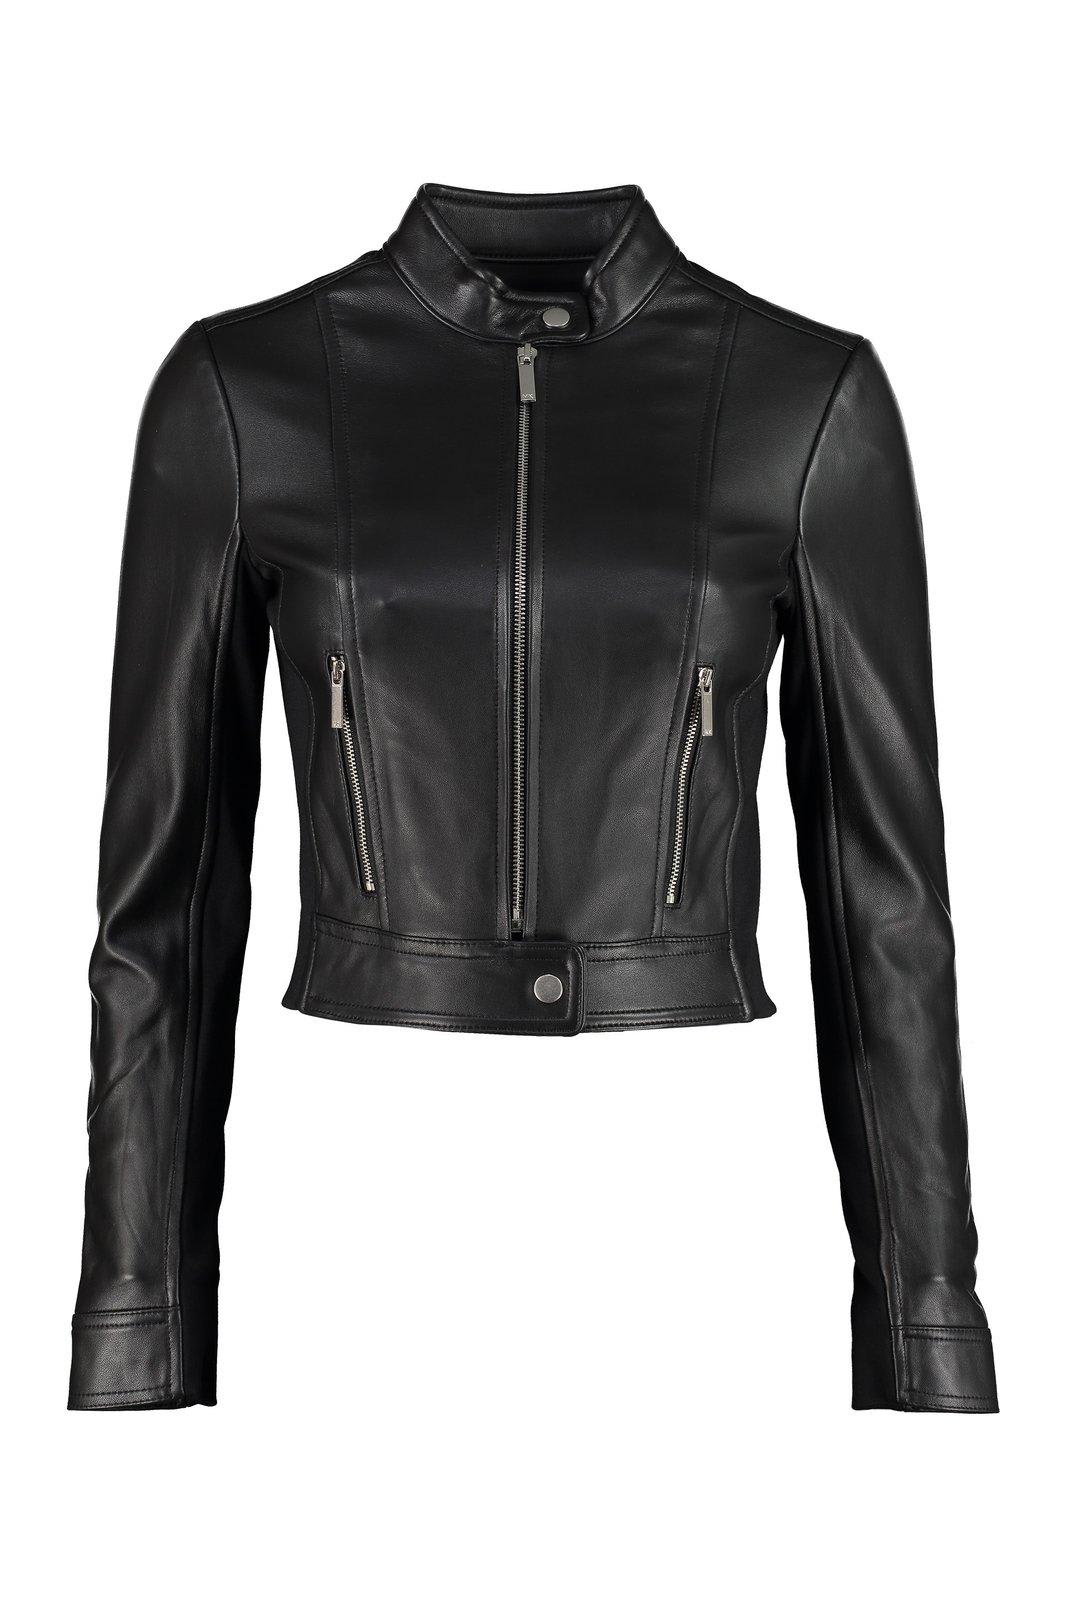 Michael Kors Cropped Leather Biker Jacket